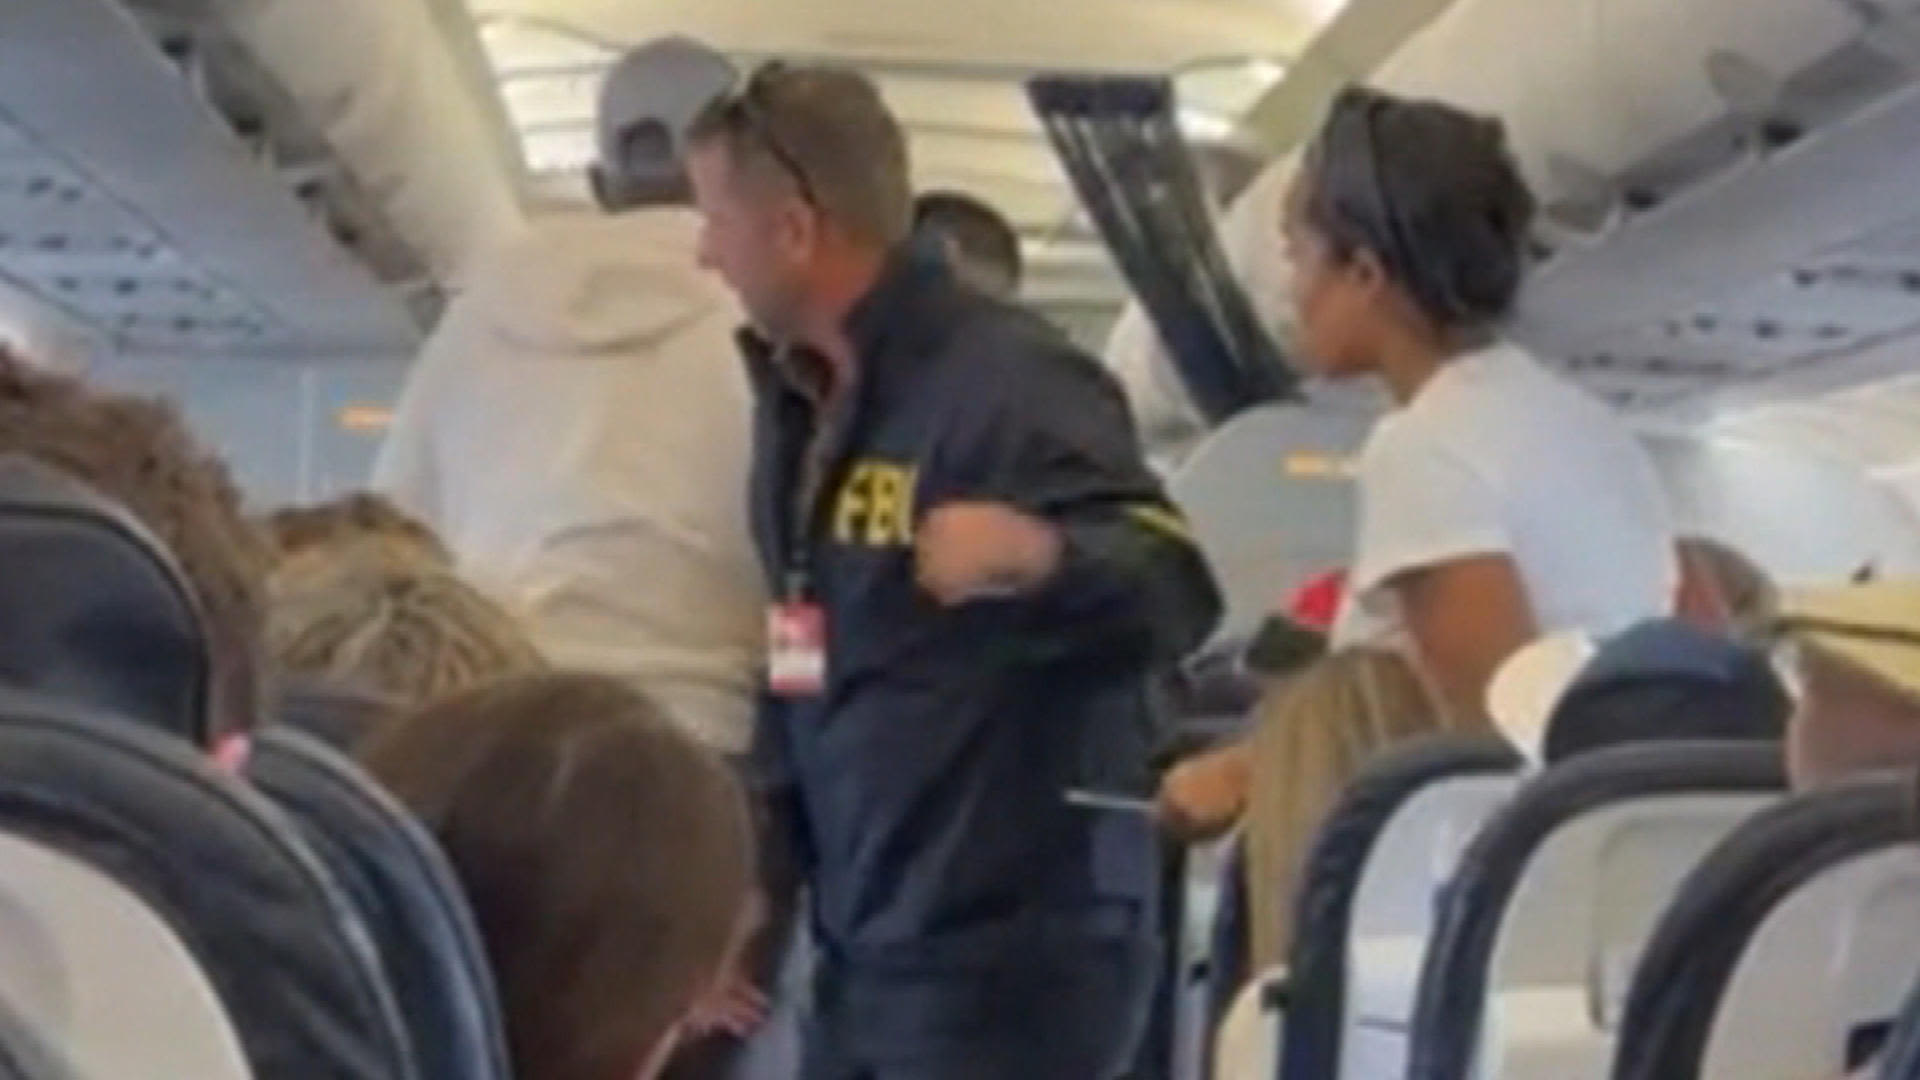 New video shows the moment Terrell Davis was handcuffed aboard flight